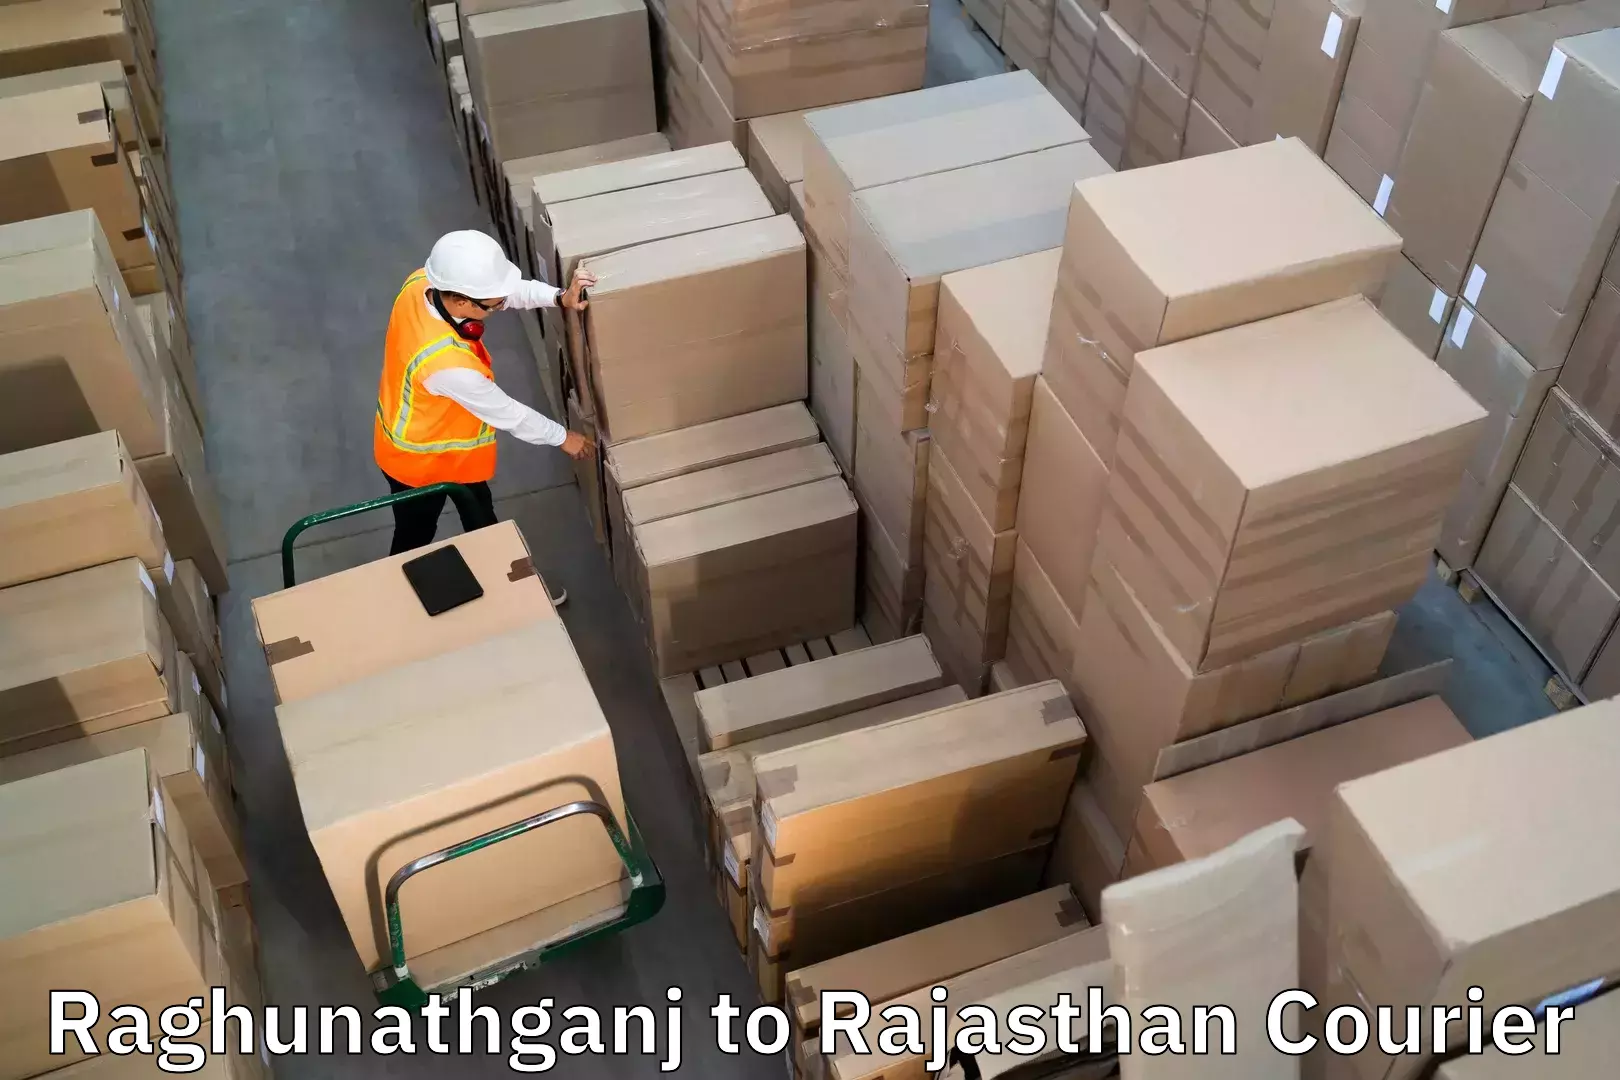 Baggage relocation service Raghunathganj to Kota